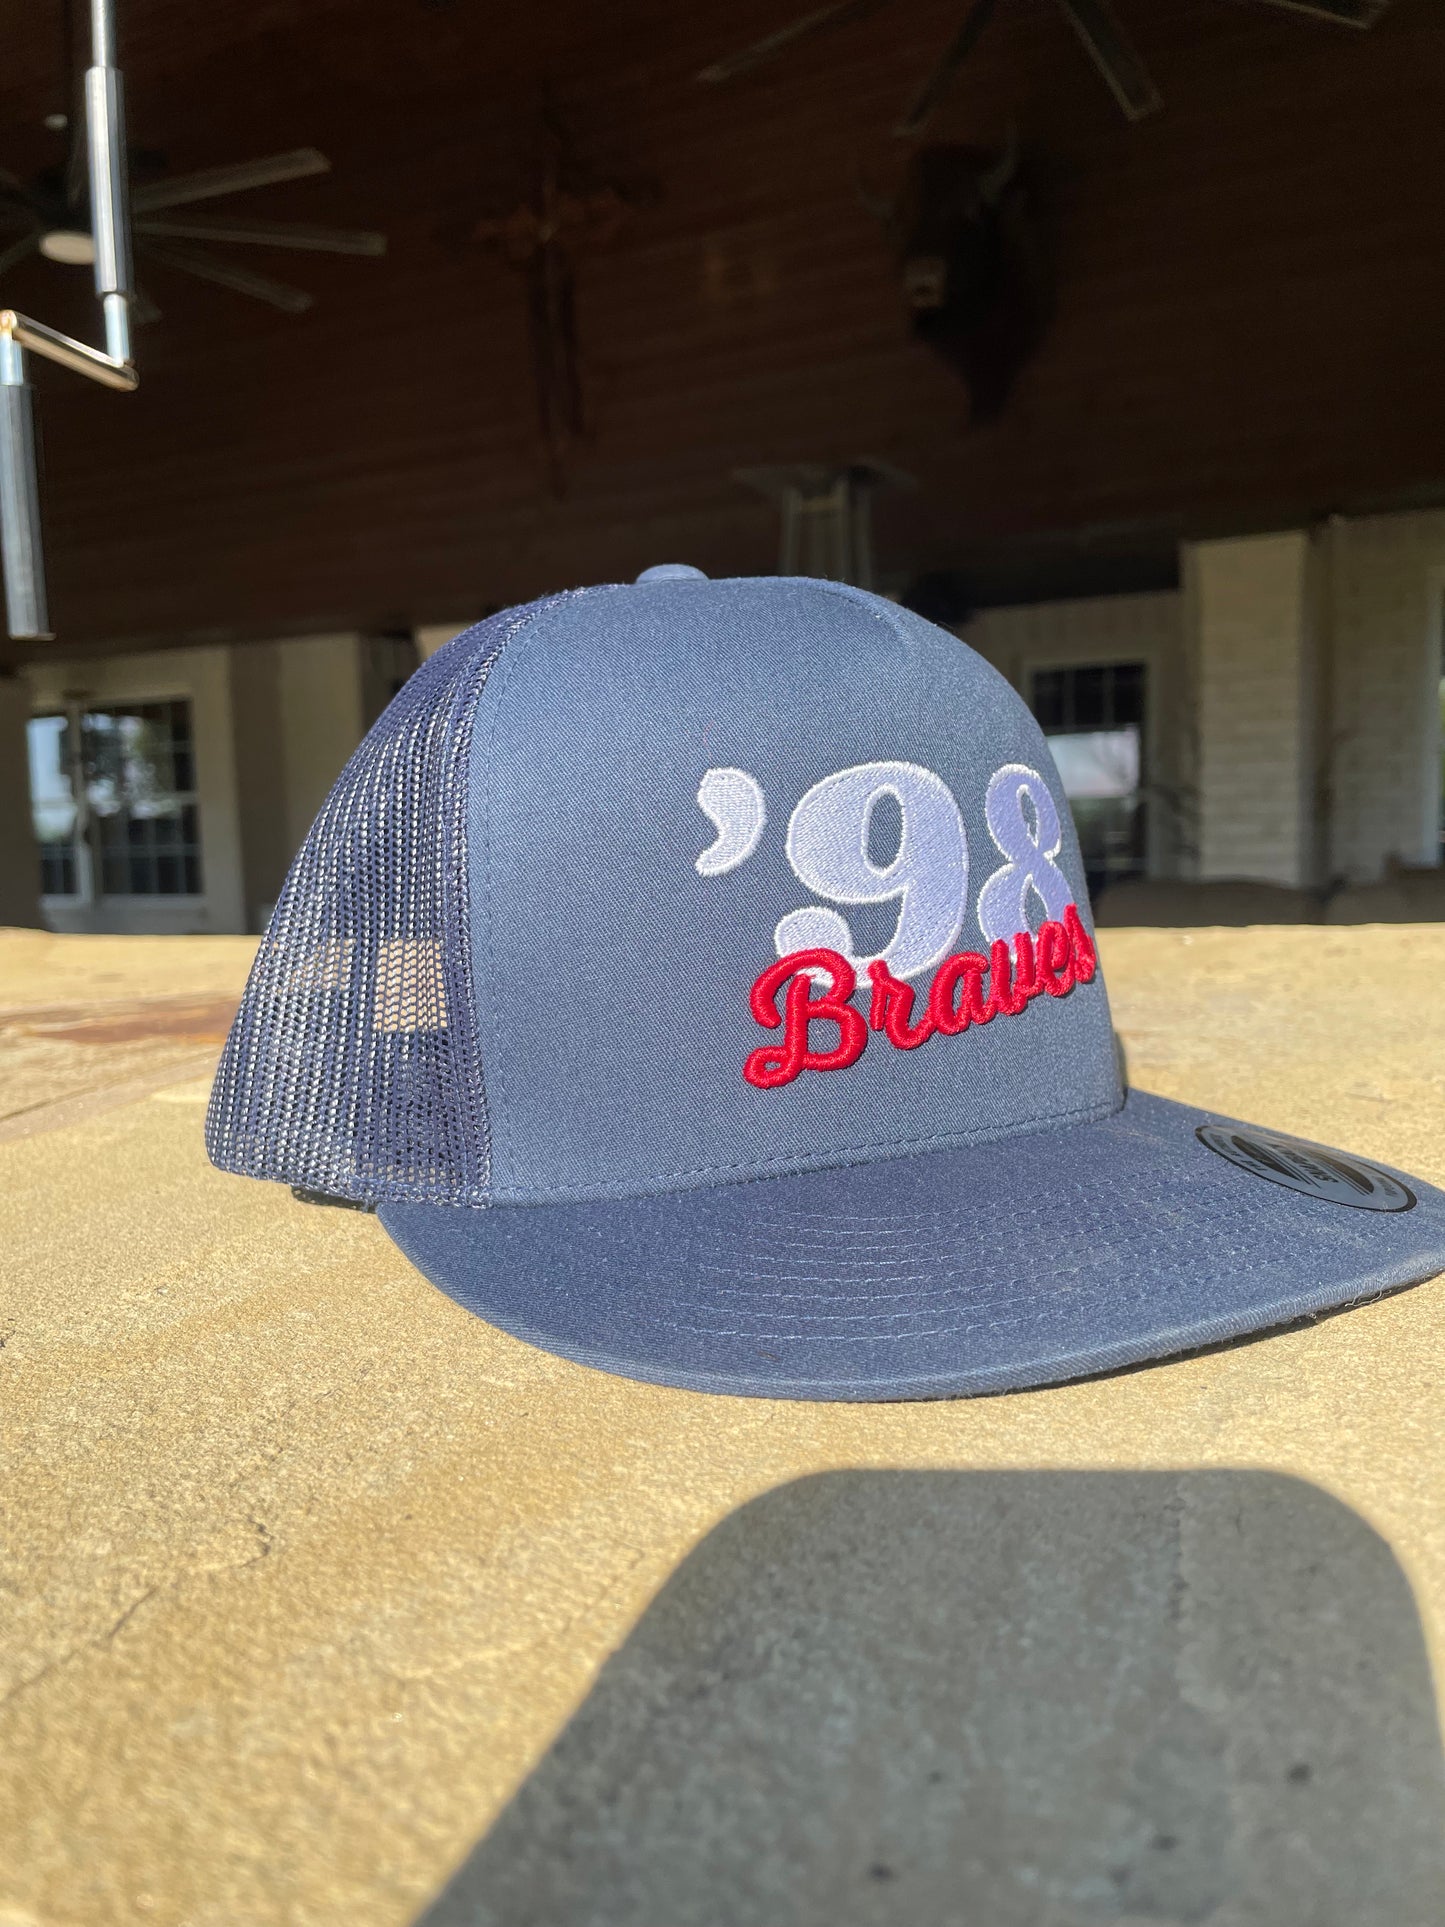 '98 Braves Hat